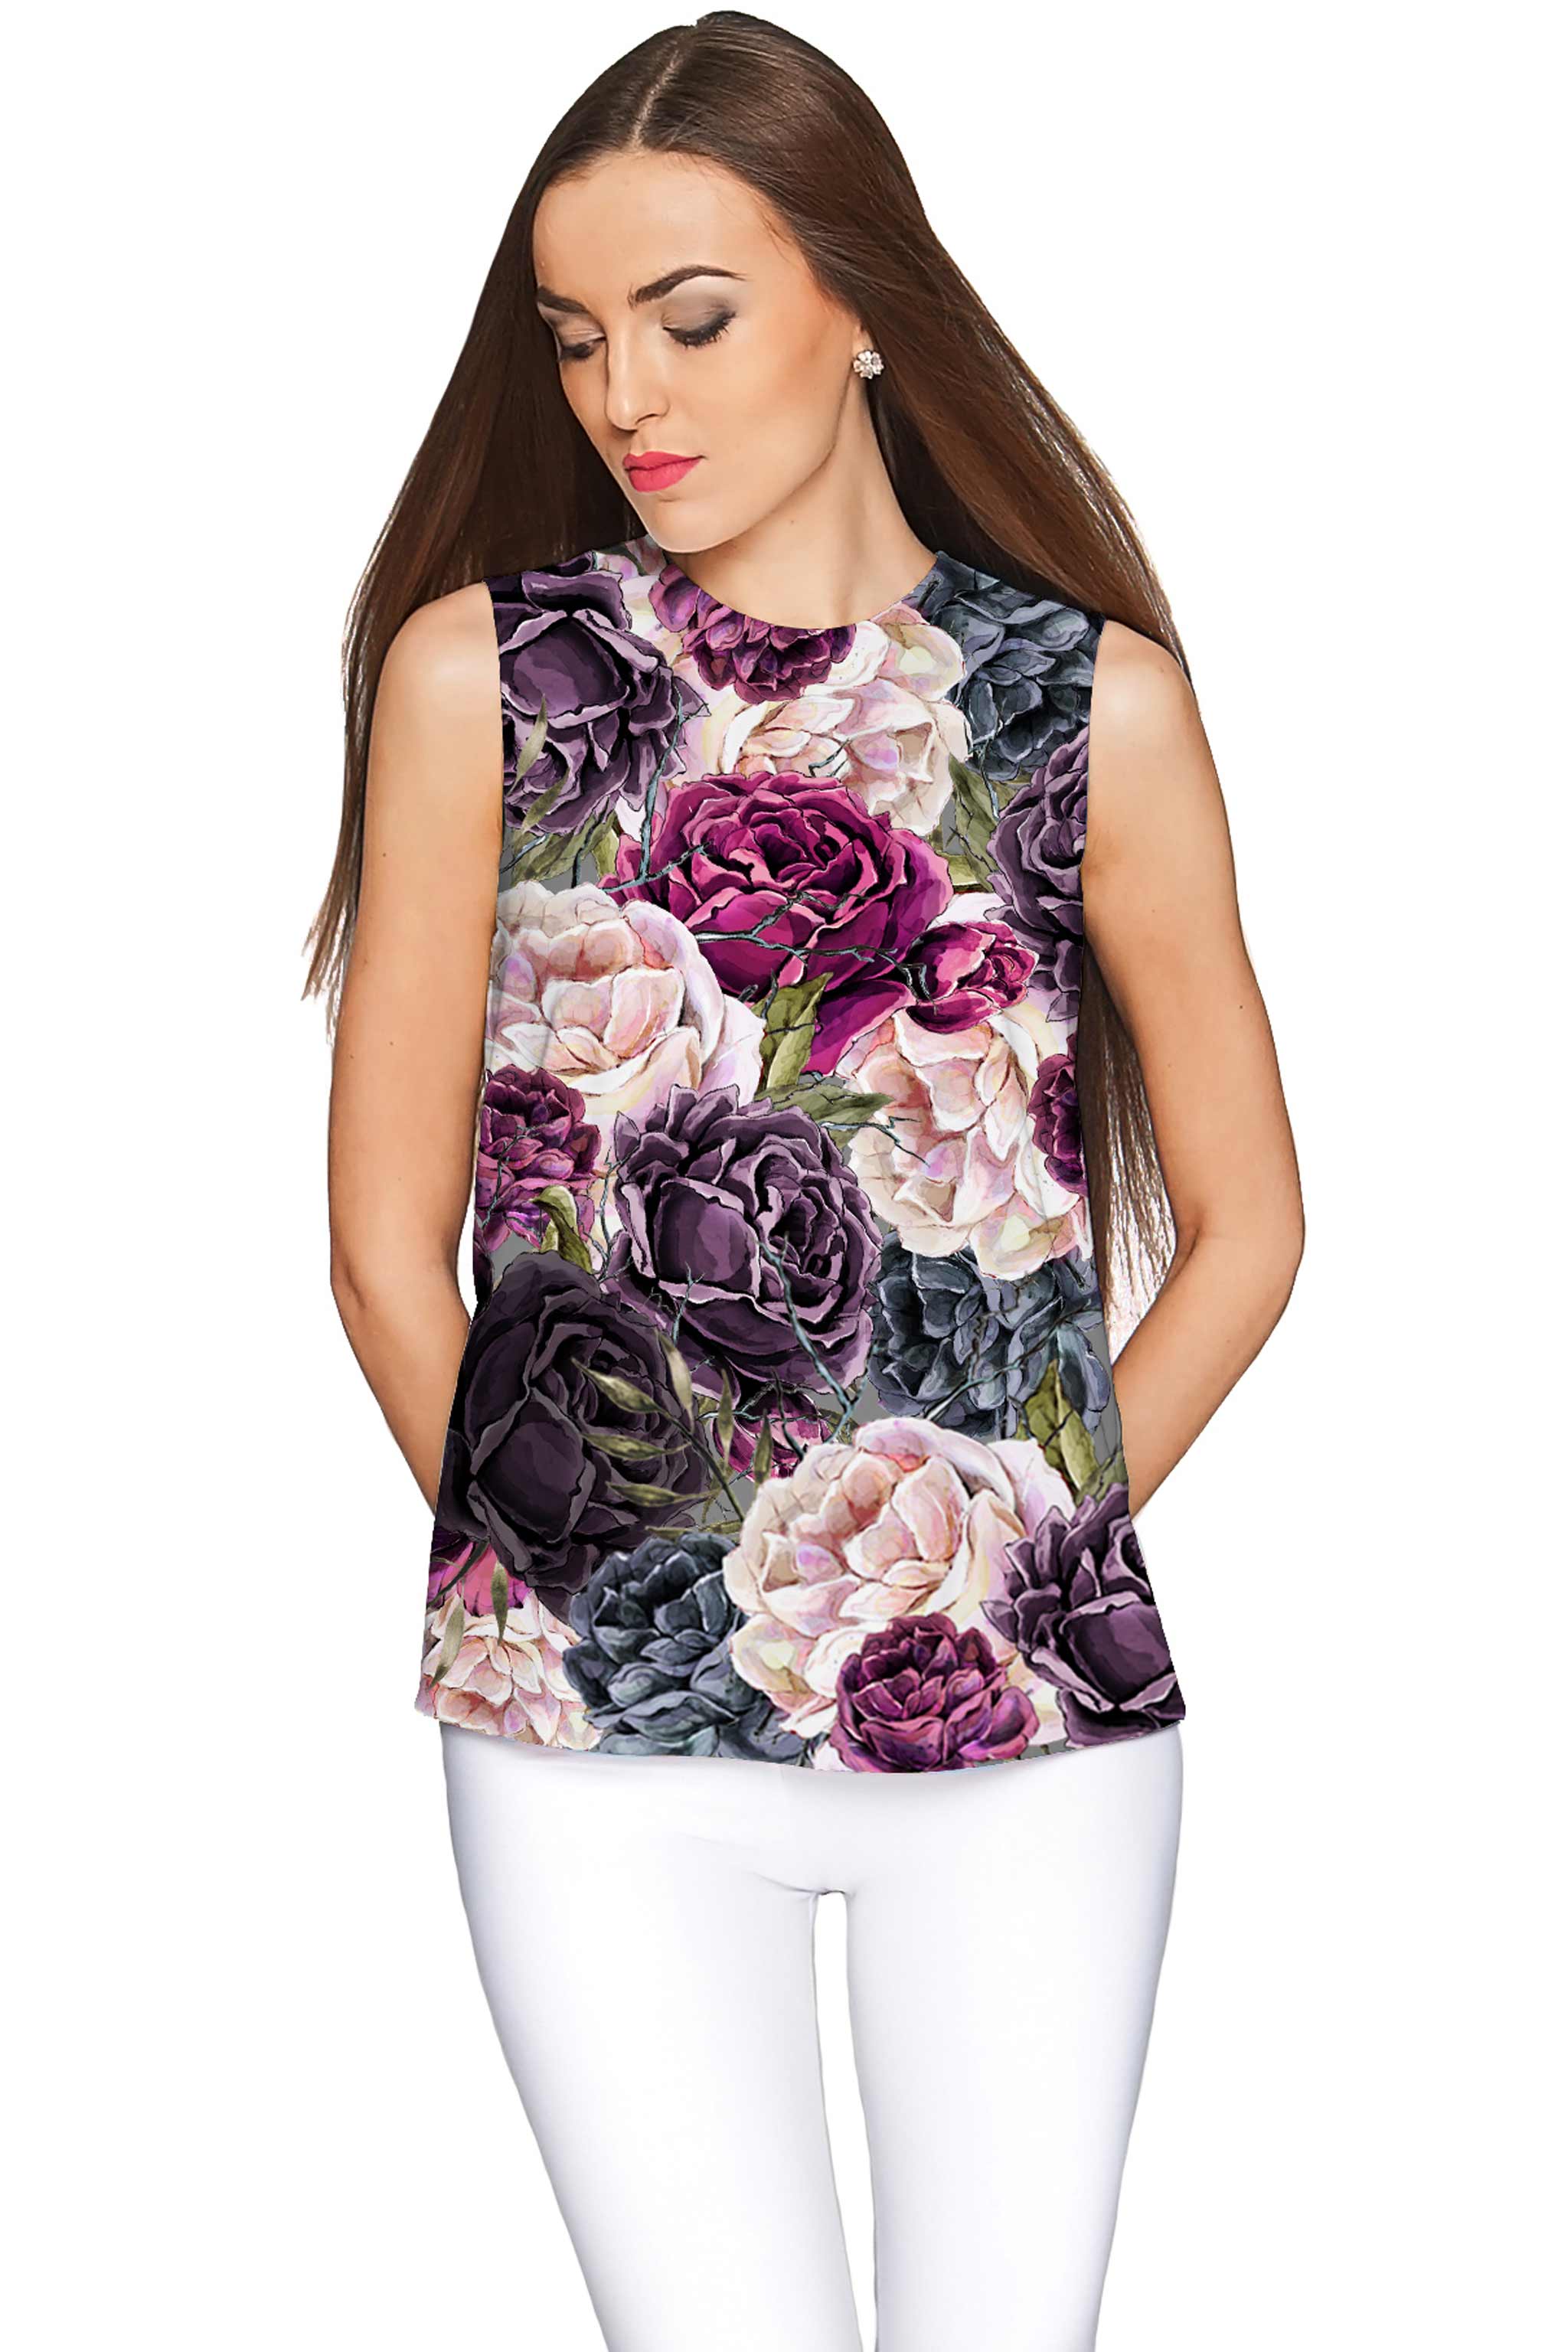 Duchess Emily Grey Floral Print Sleeveless Summer Top - Women - Pineapple Clothing